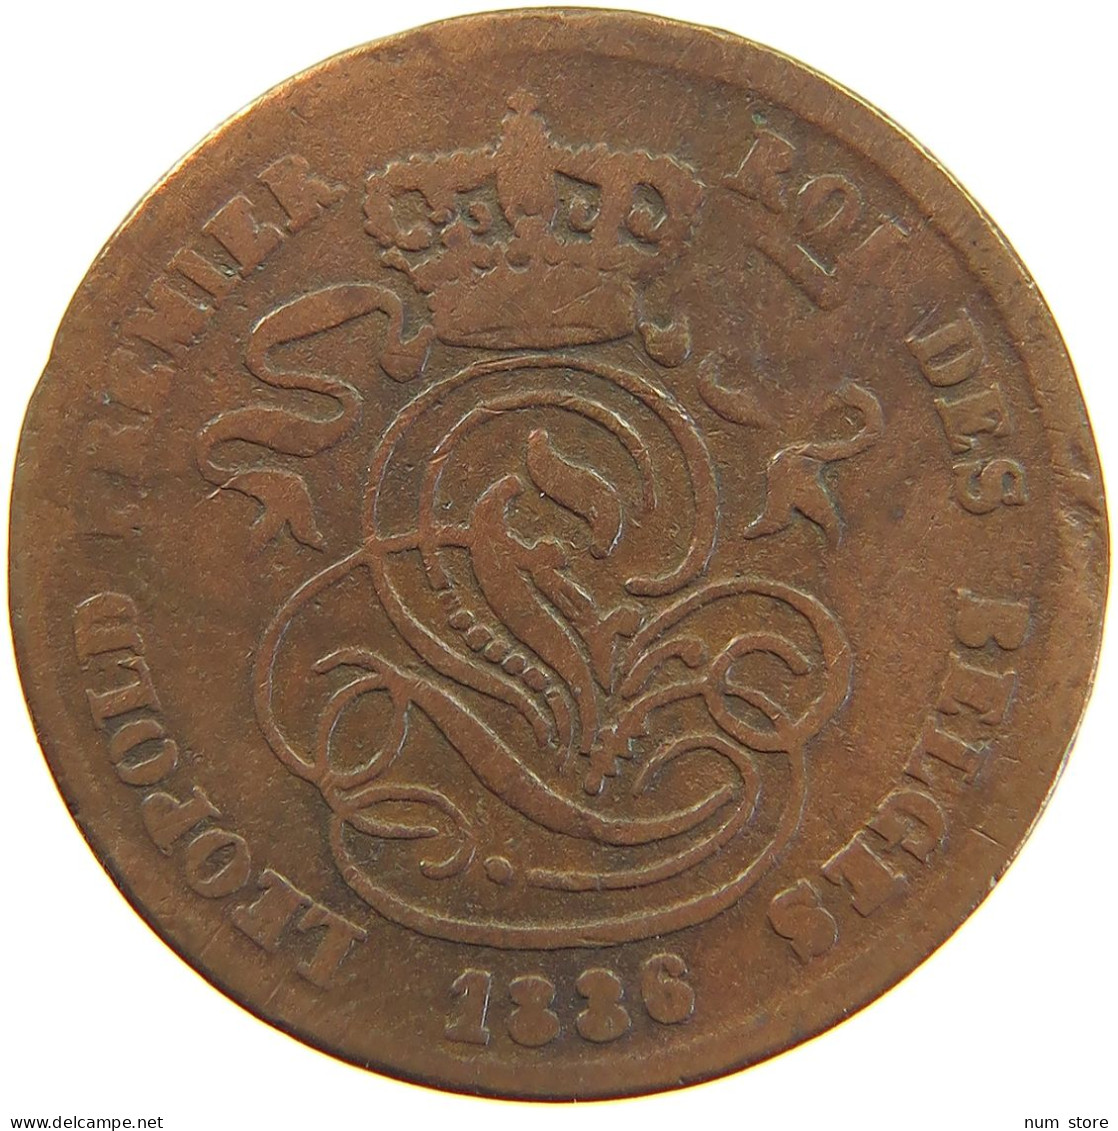 BELGIUM 2 CENTIMES 1836 Leopold I. (1831-1865) 2 CENTIMES 1835 STRUCK OVER NETHERLANDS CENT #c050 0423 - 2 Cent